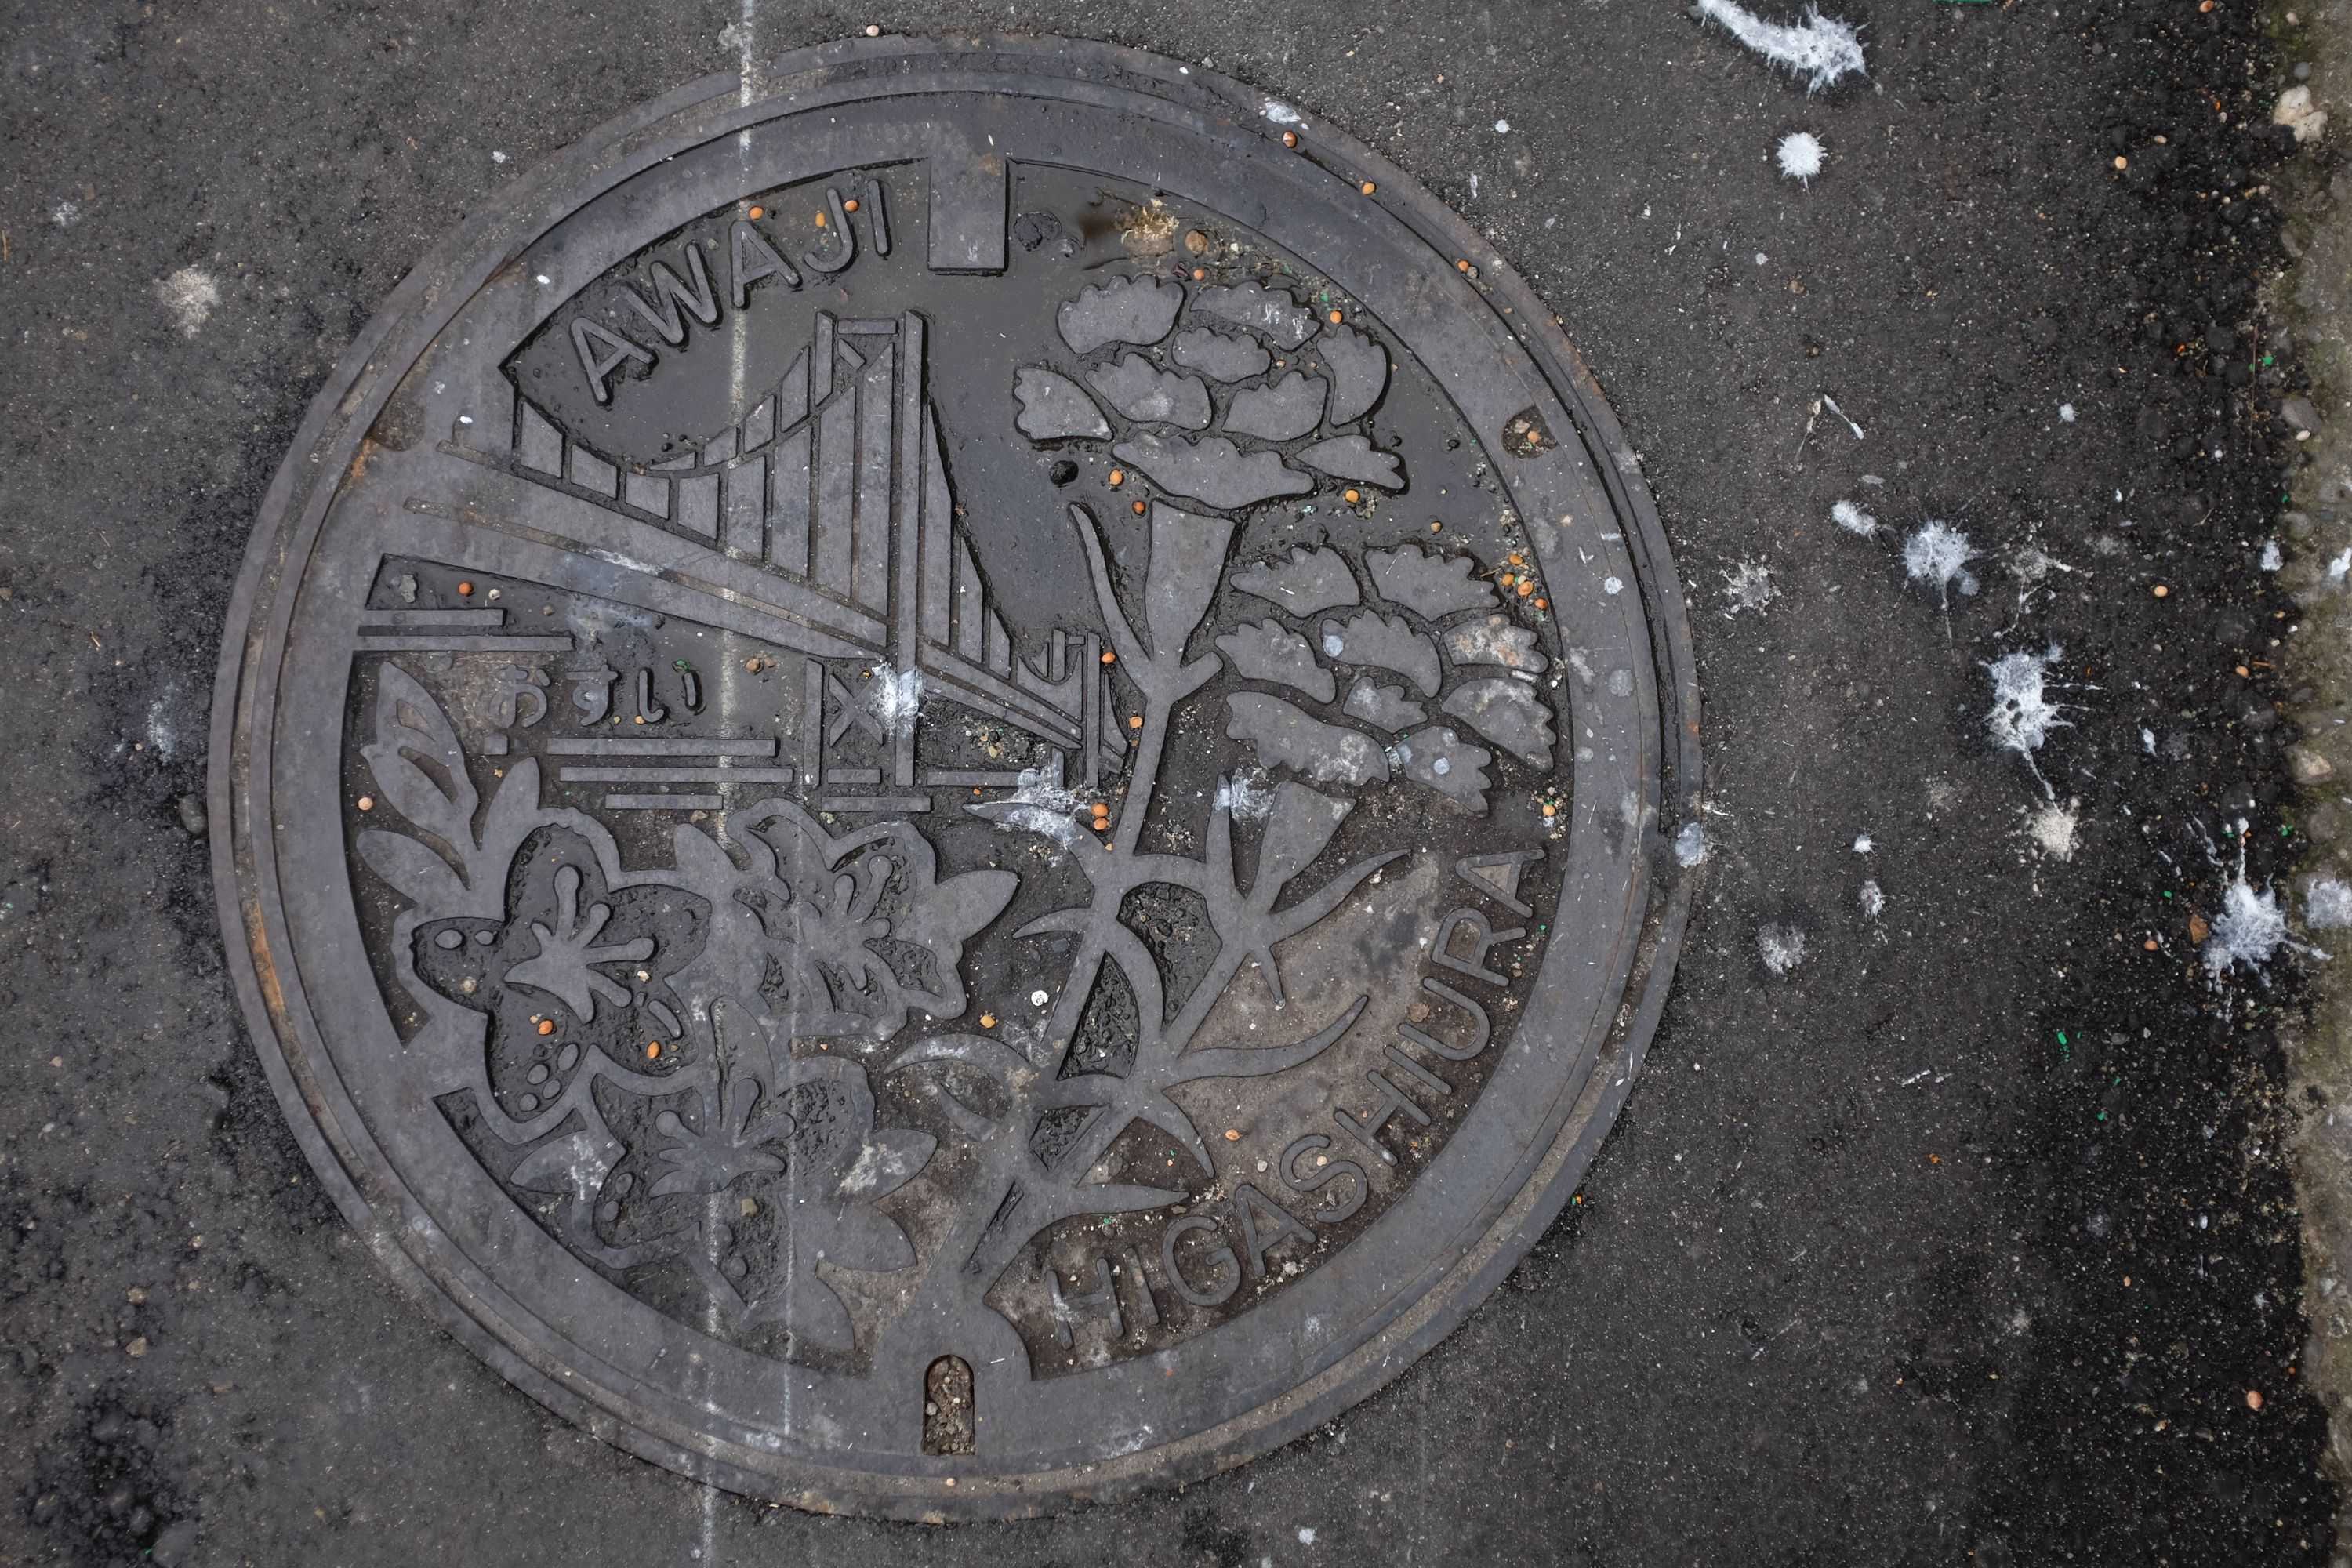 A manhole cover shows the Akashi Kaikyō Bridge and some flowers.